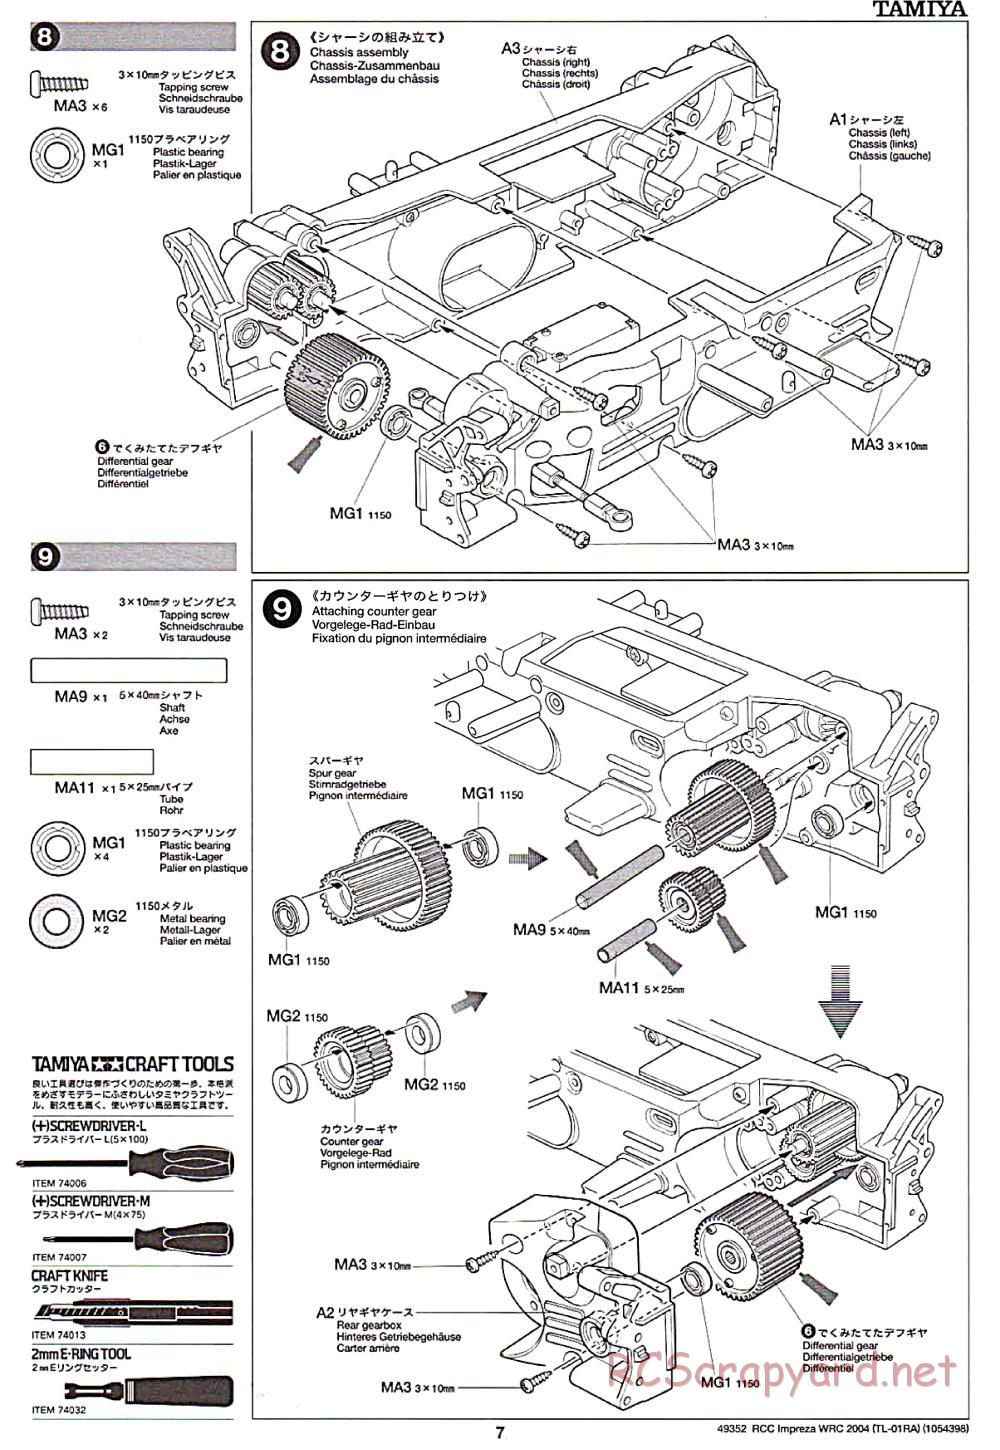 Tamiya - Subaru Impreza WRC 2004 Chassis - Manual - Page 7